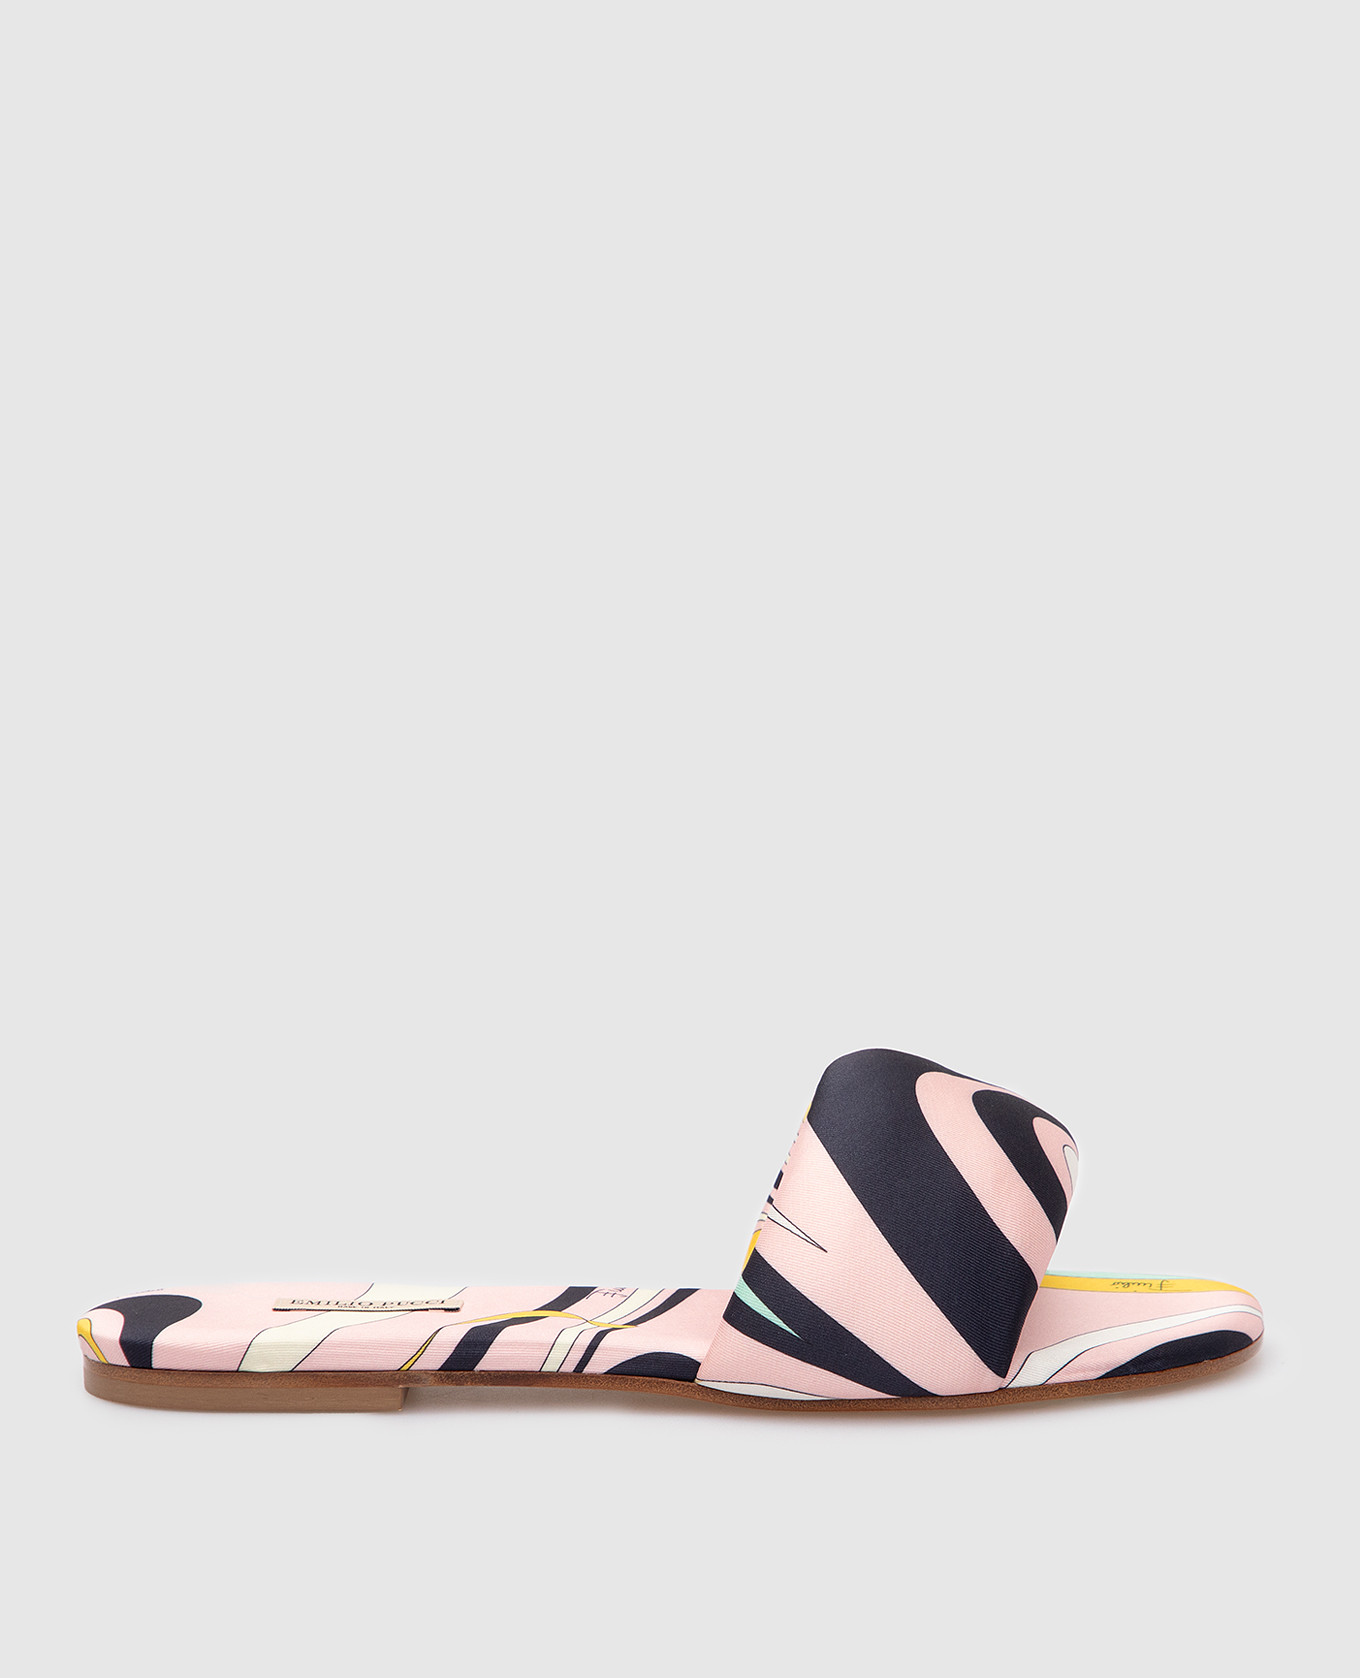 Pink flip flops in Onde pattern